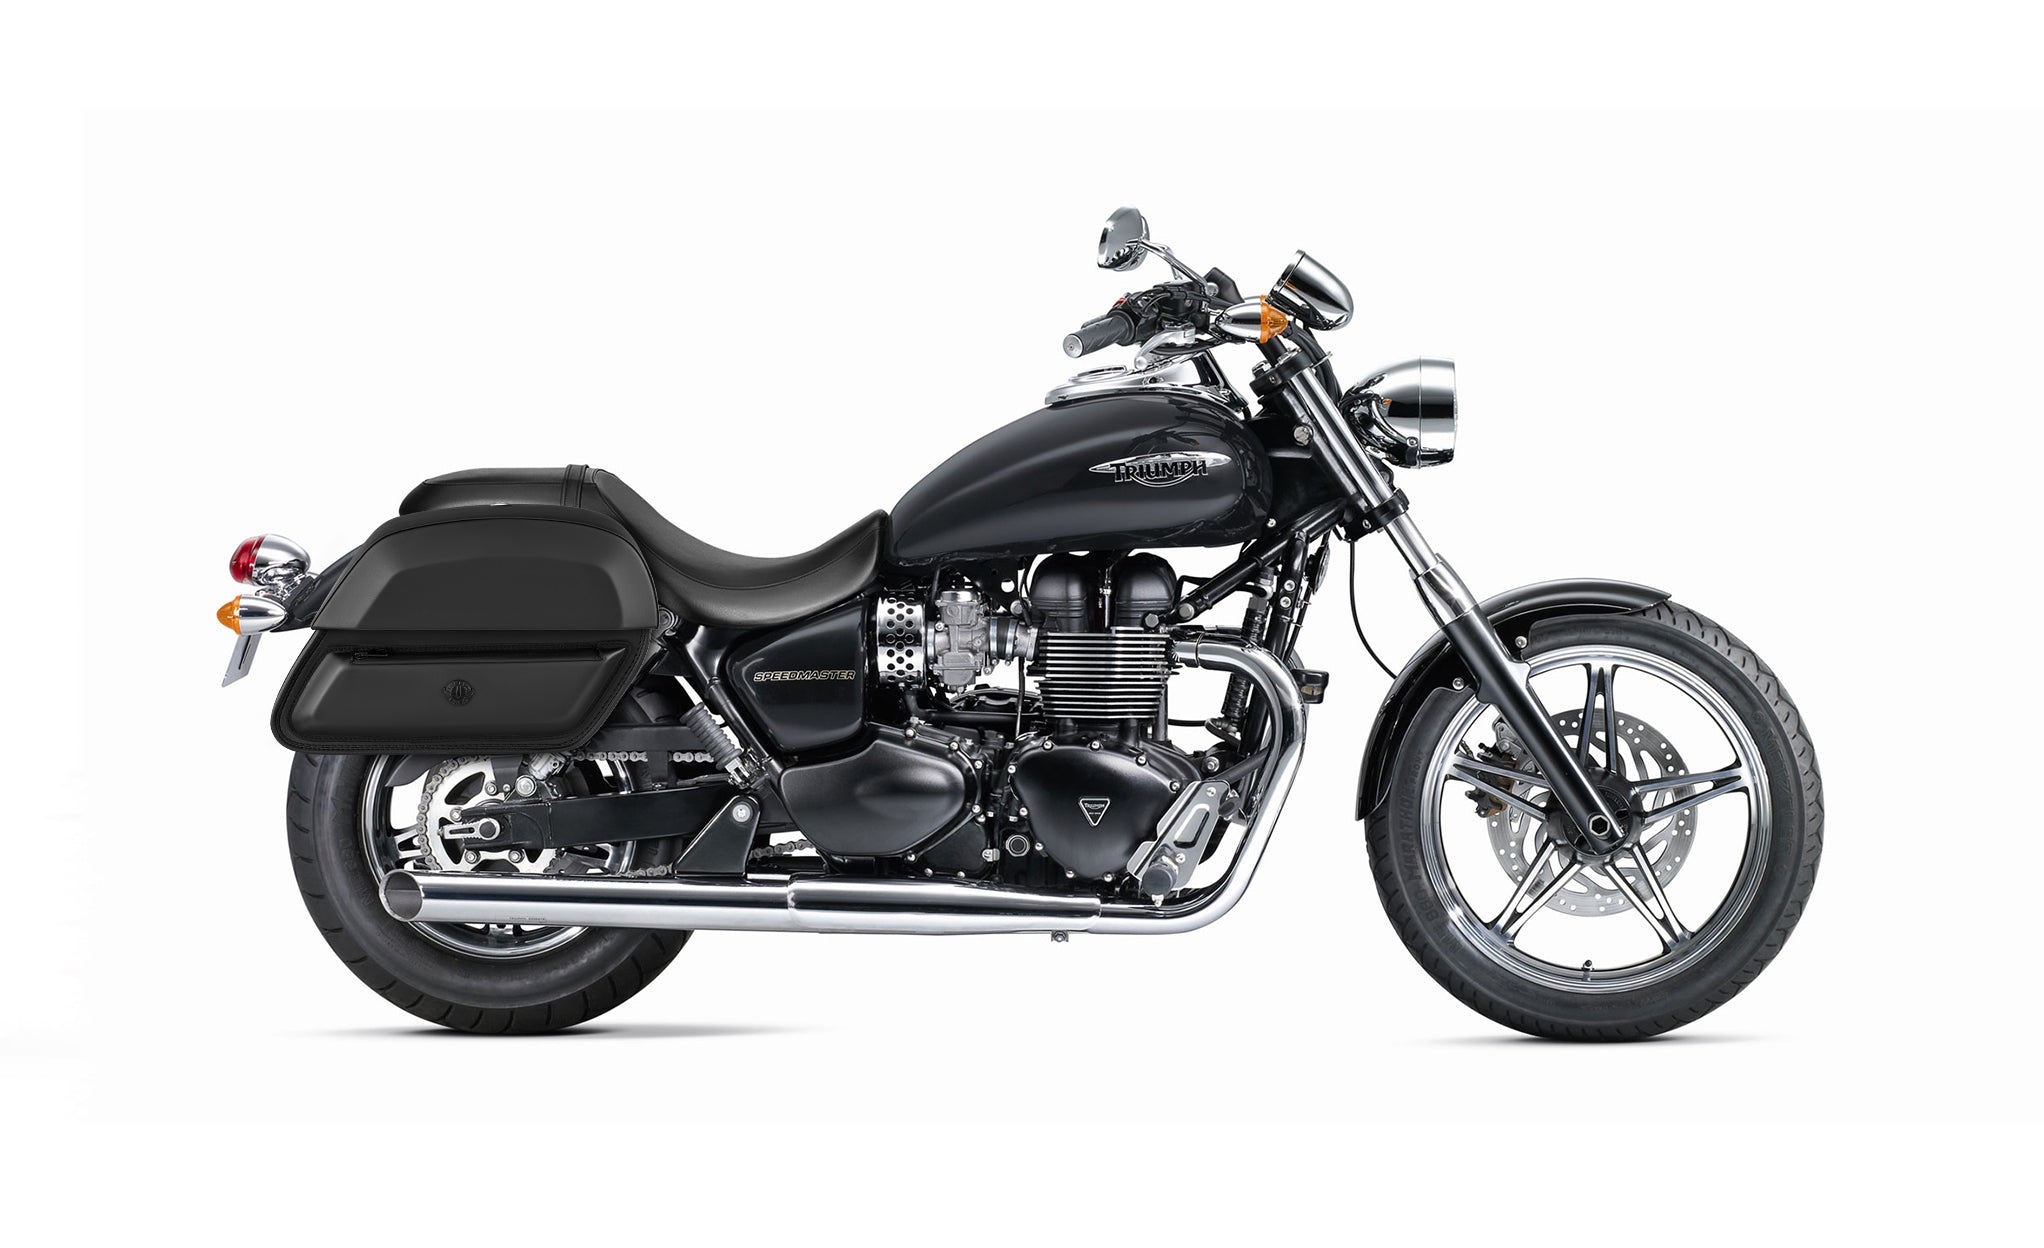 28L - Wraith Medium Triumph Speedmaster (2003-17) Leather Motorcycle Saddlebags BAG on Bike View @expand